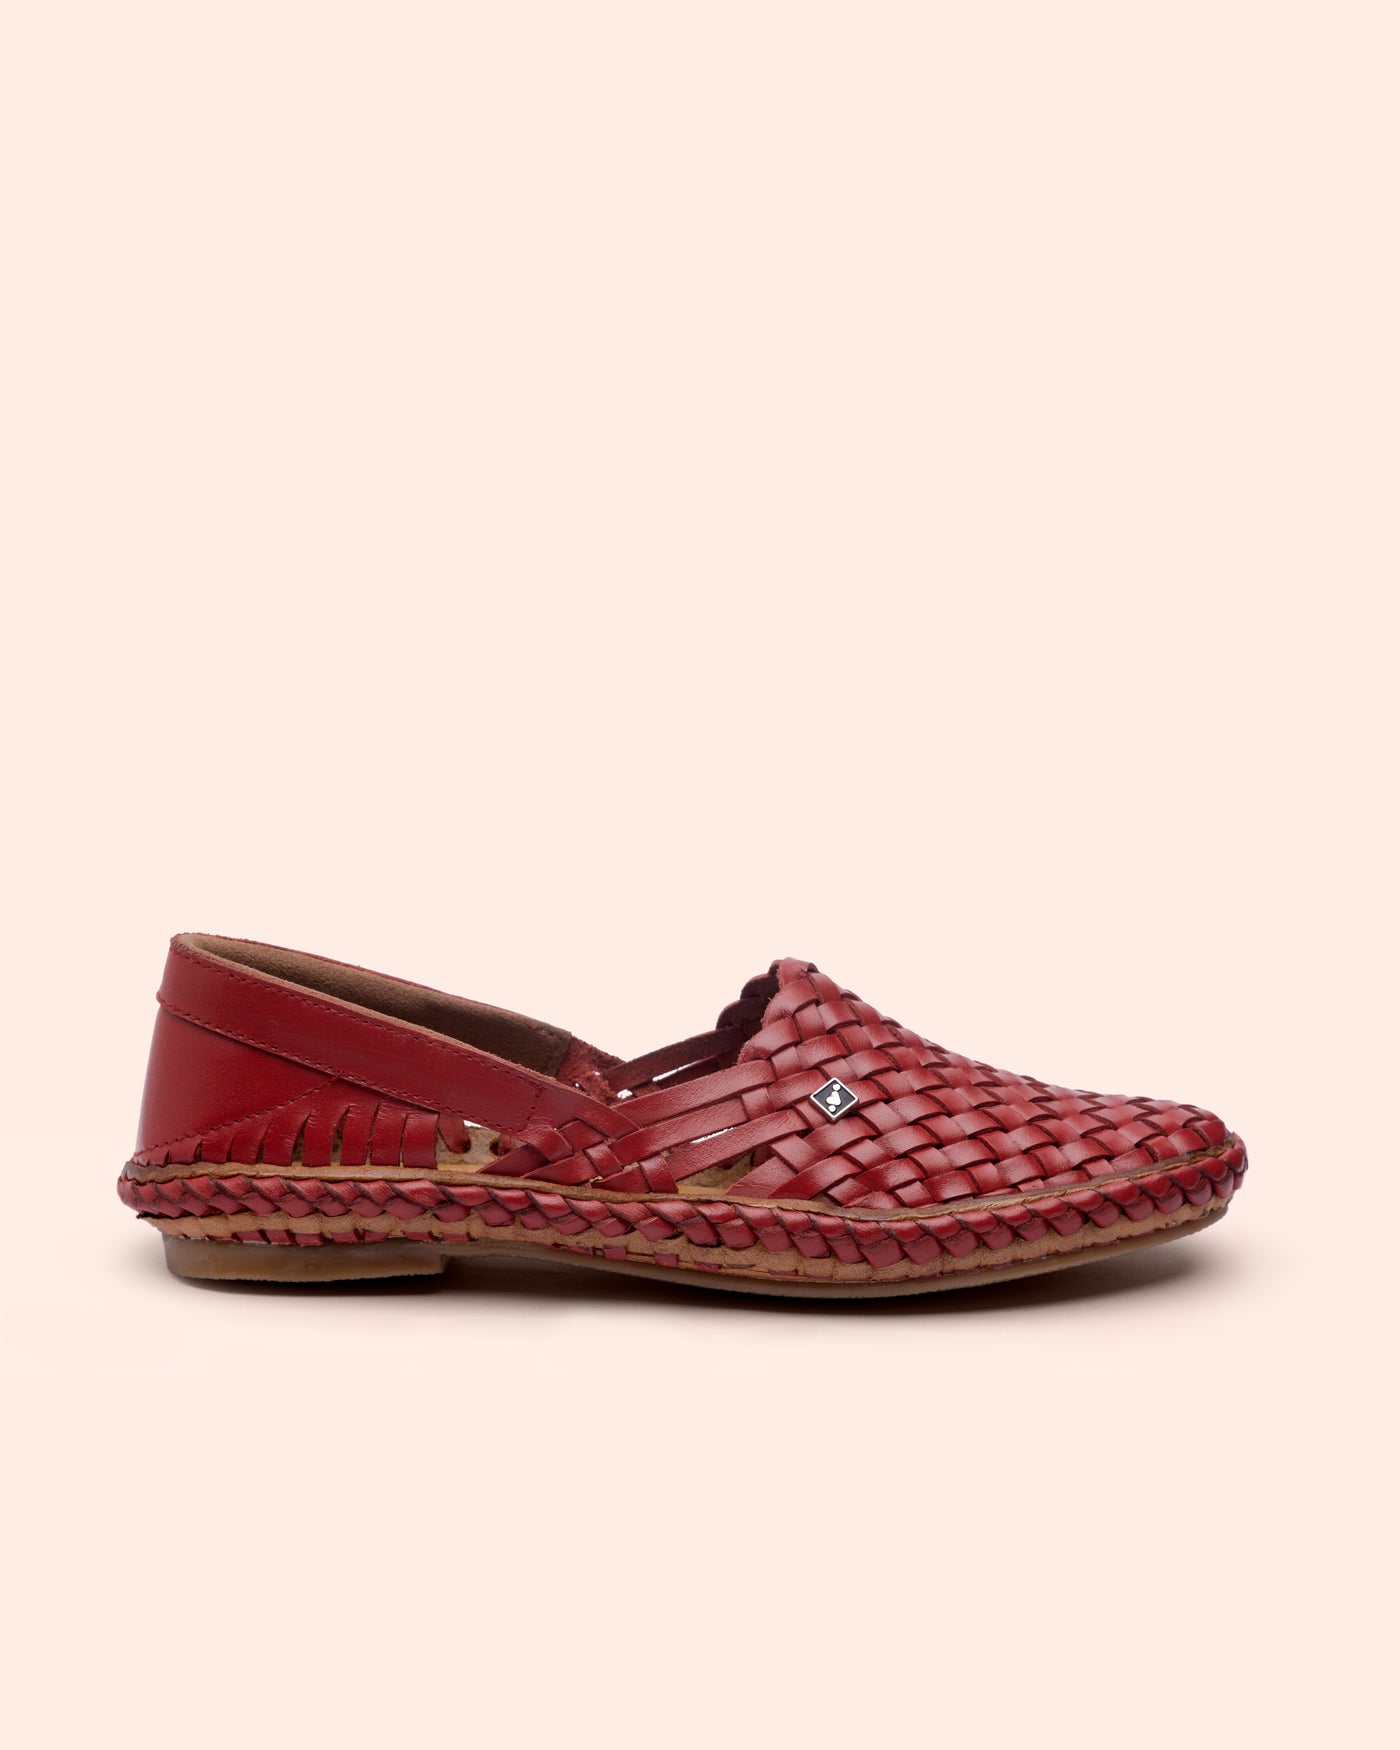 Fireworkshouse-handmade-leather-shoes-HOLA RED